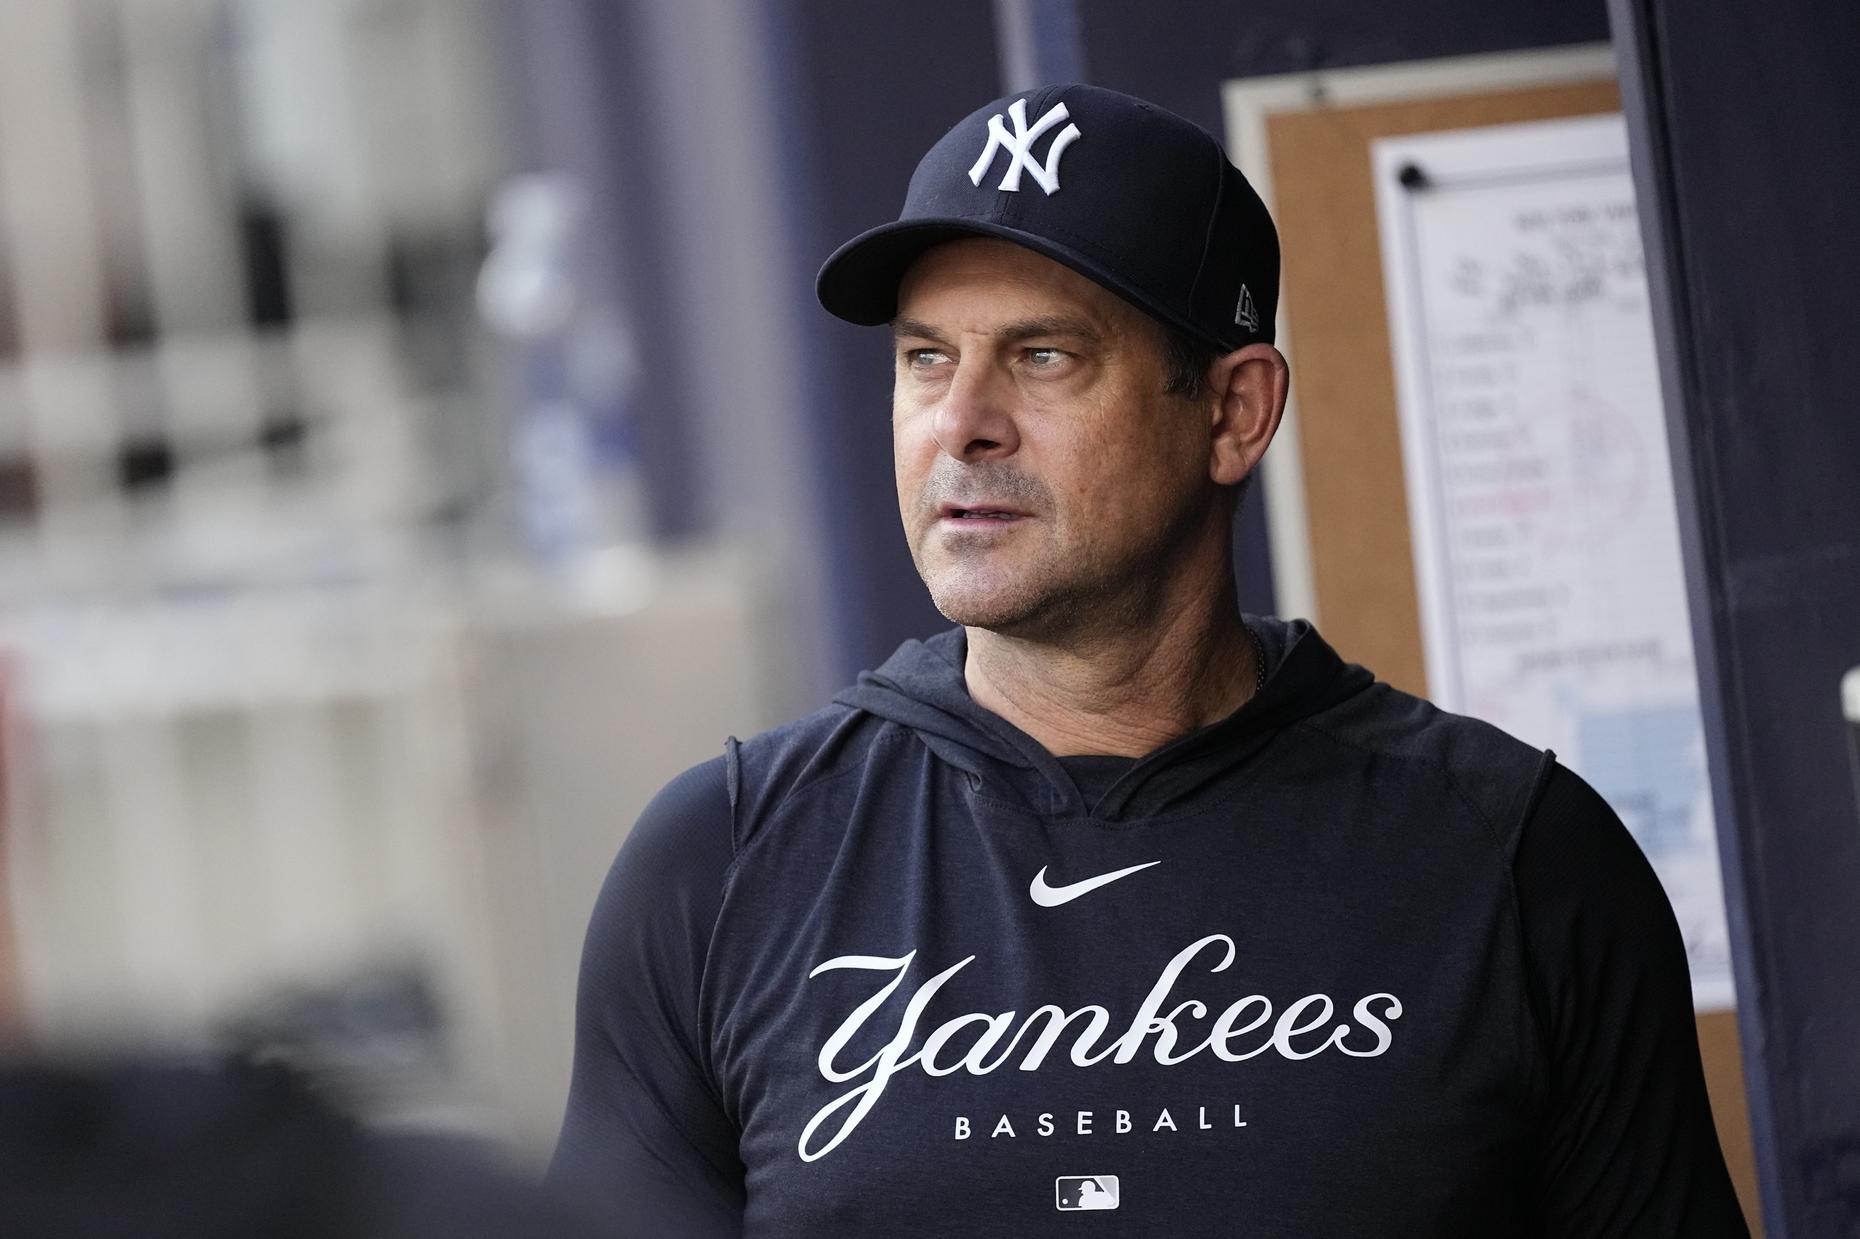 Yankees coach 'fully expects' Josh Donaldson bounce-back